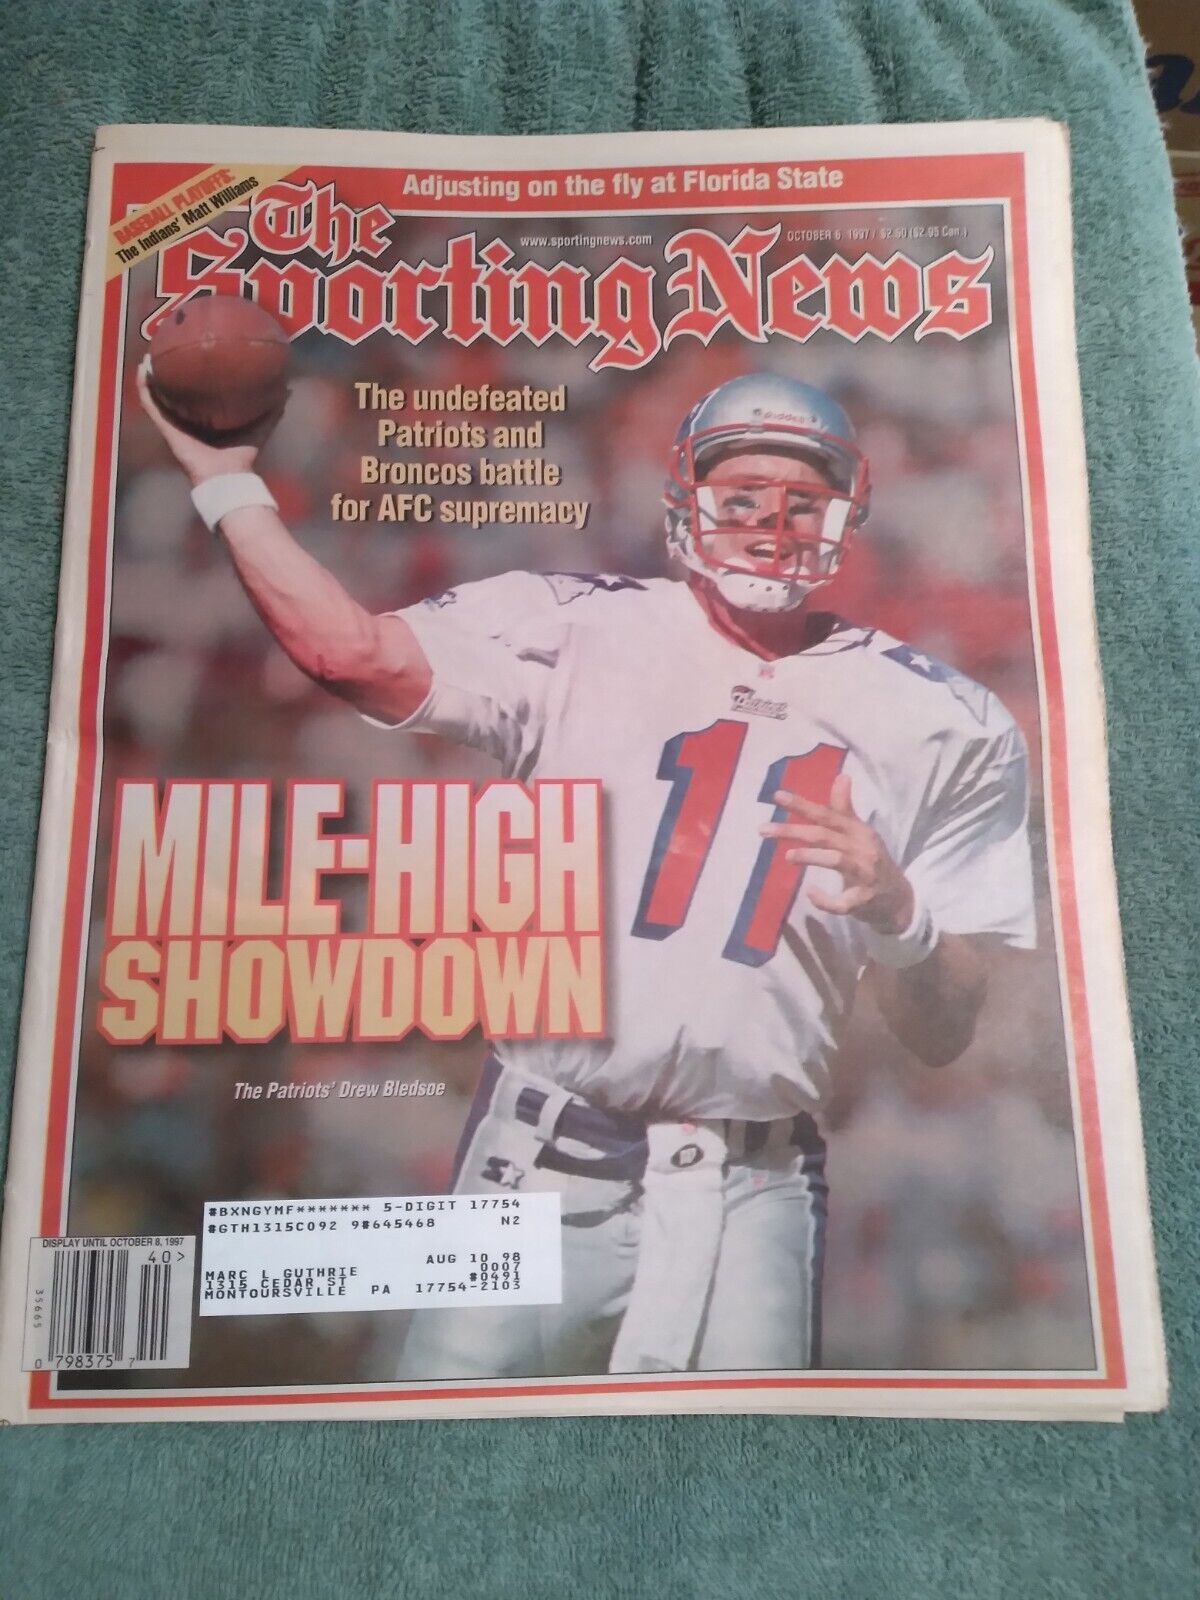 The Sporting News October 6, 1997 New England Patriots QB Drew Bledsoe